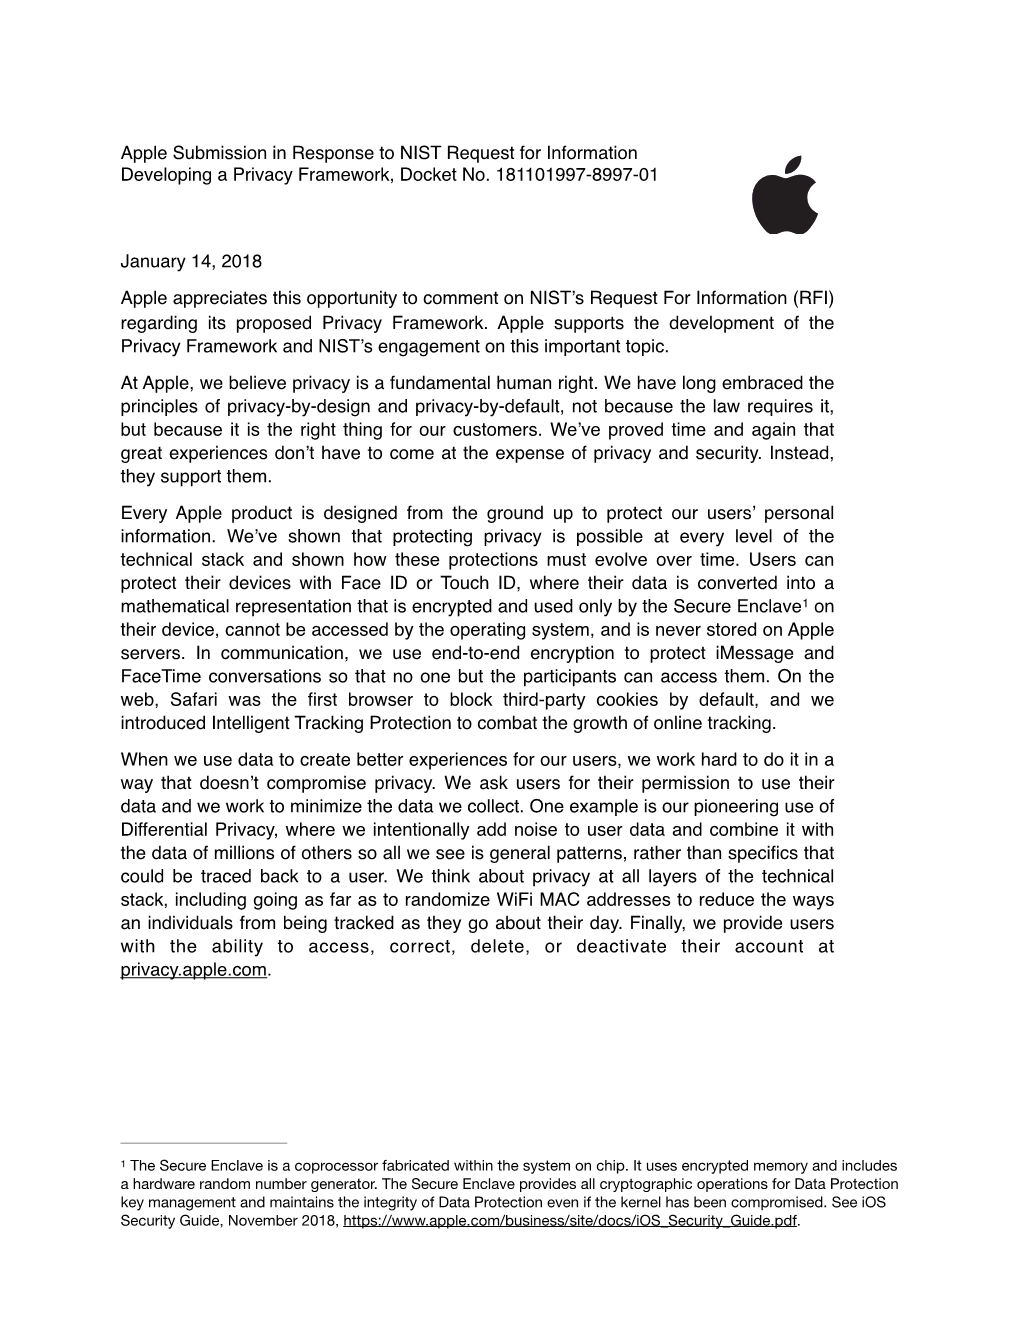 Apple Submission NIST RFI Privacy Framework